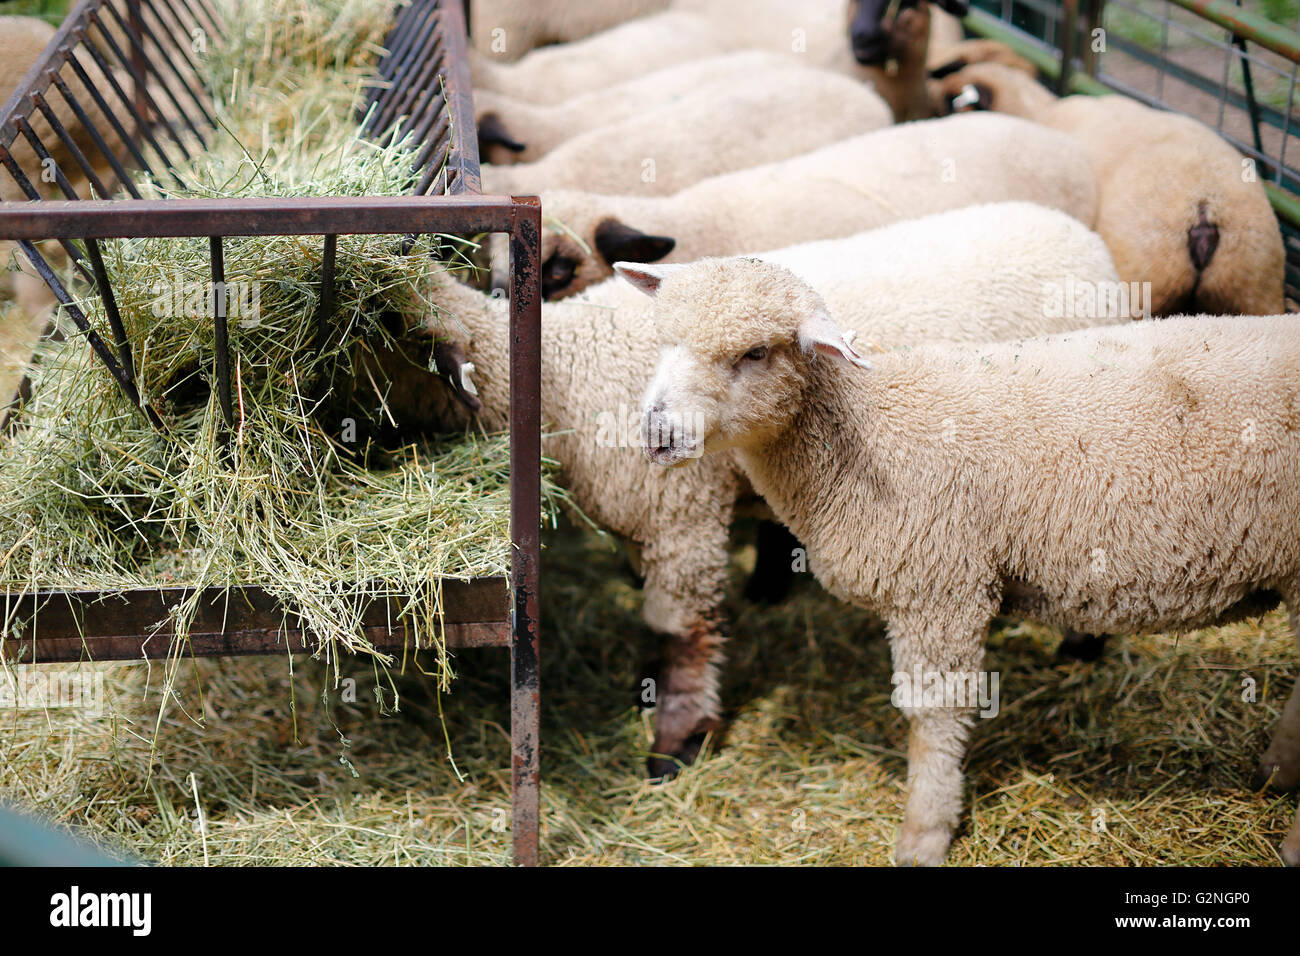 Sheep feeding on hay in the barnyard of a local farm. Stock Photo